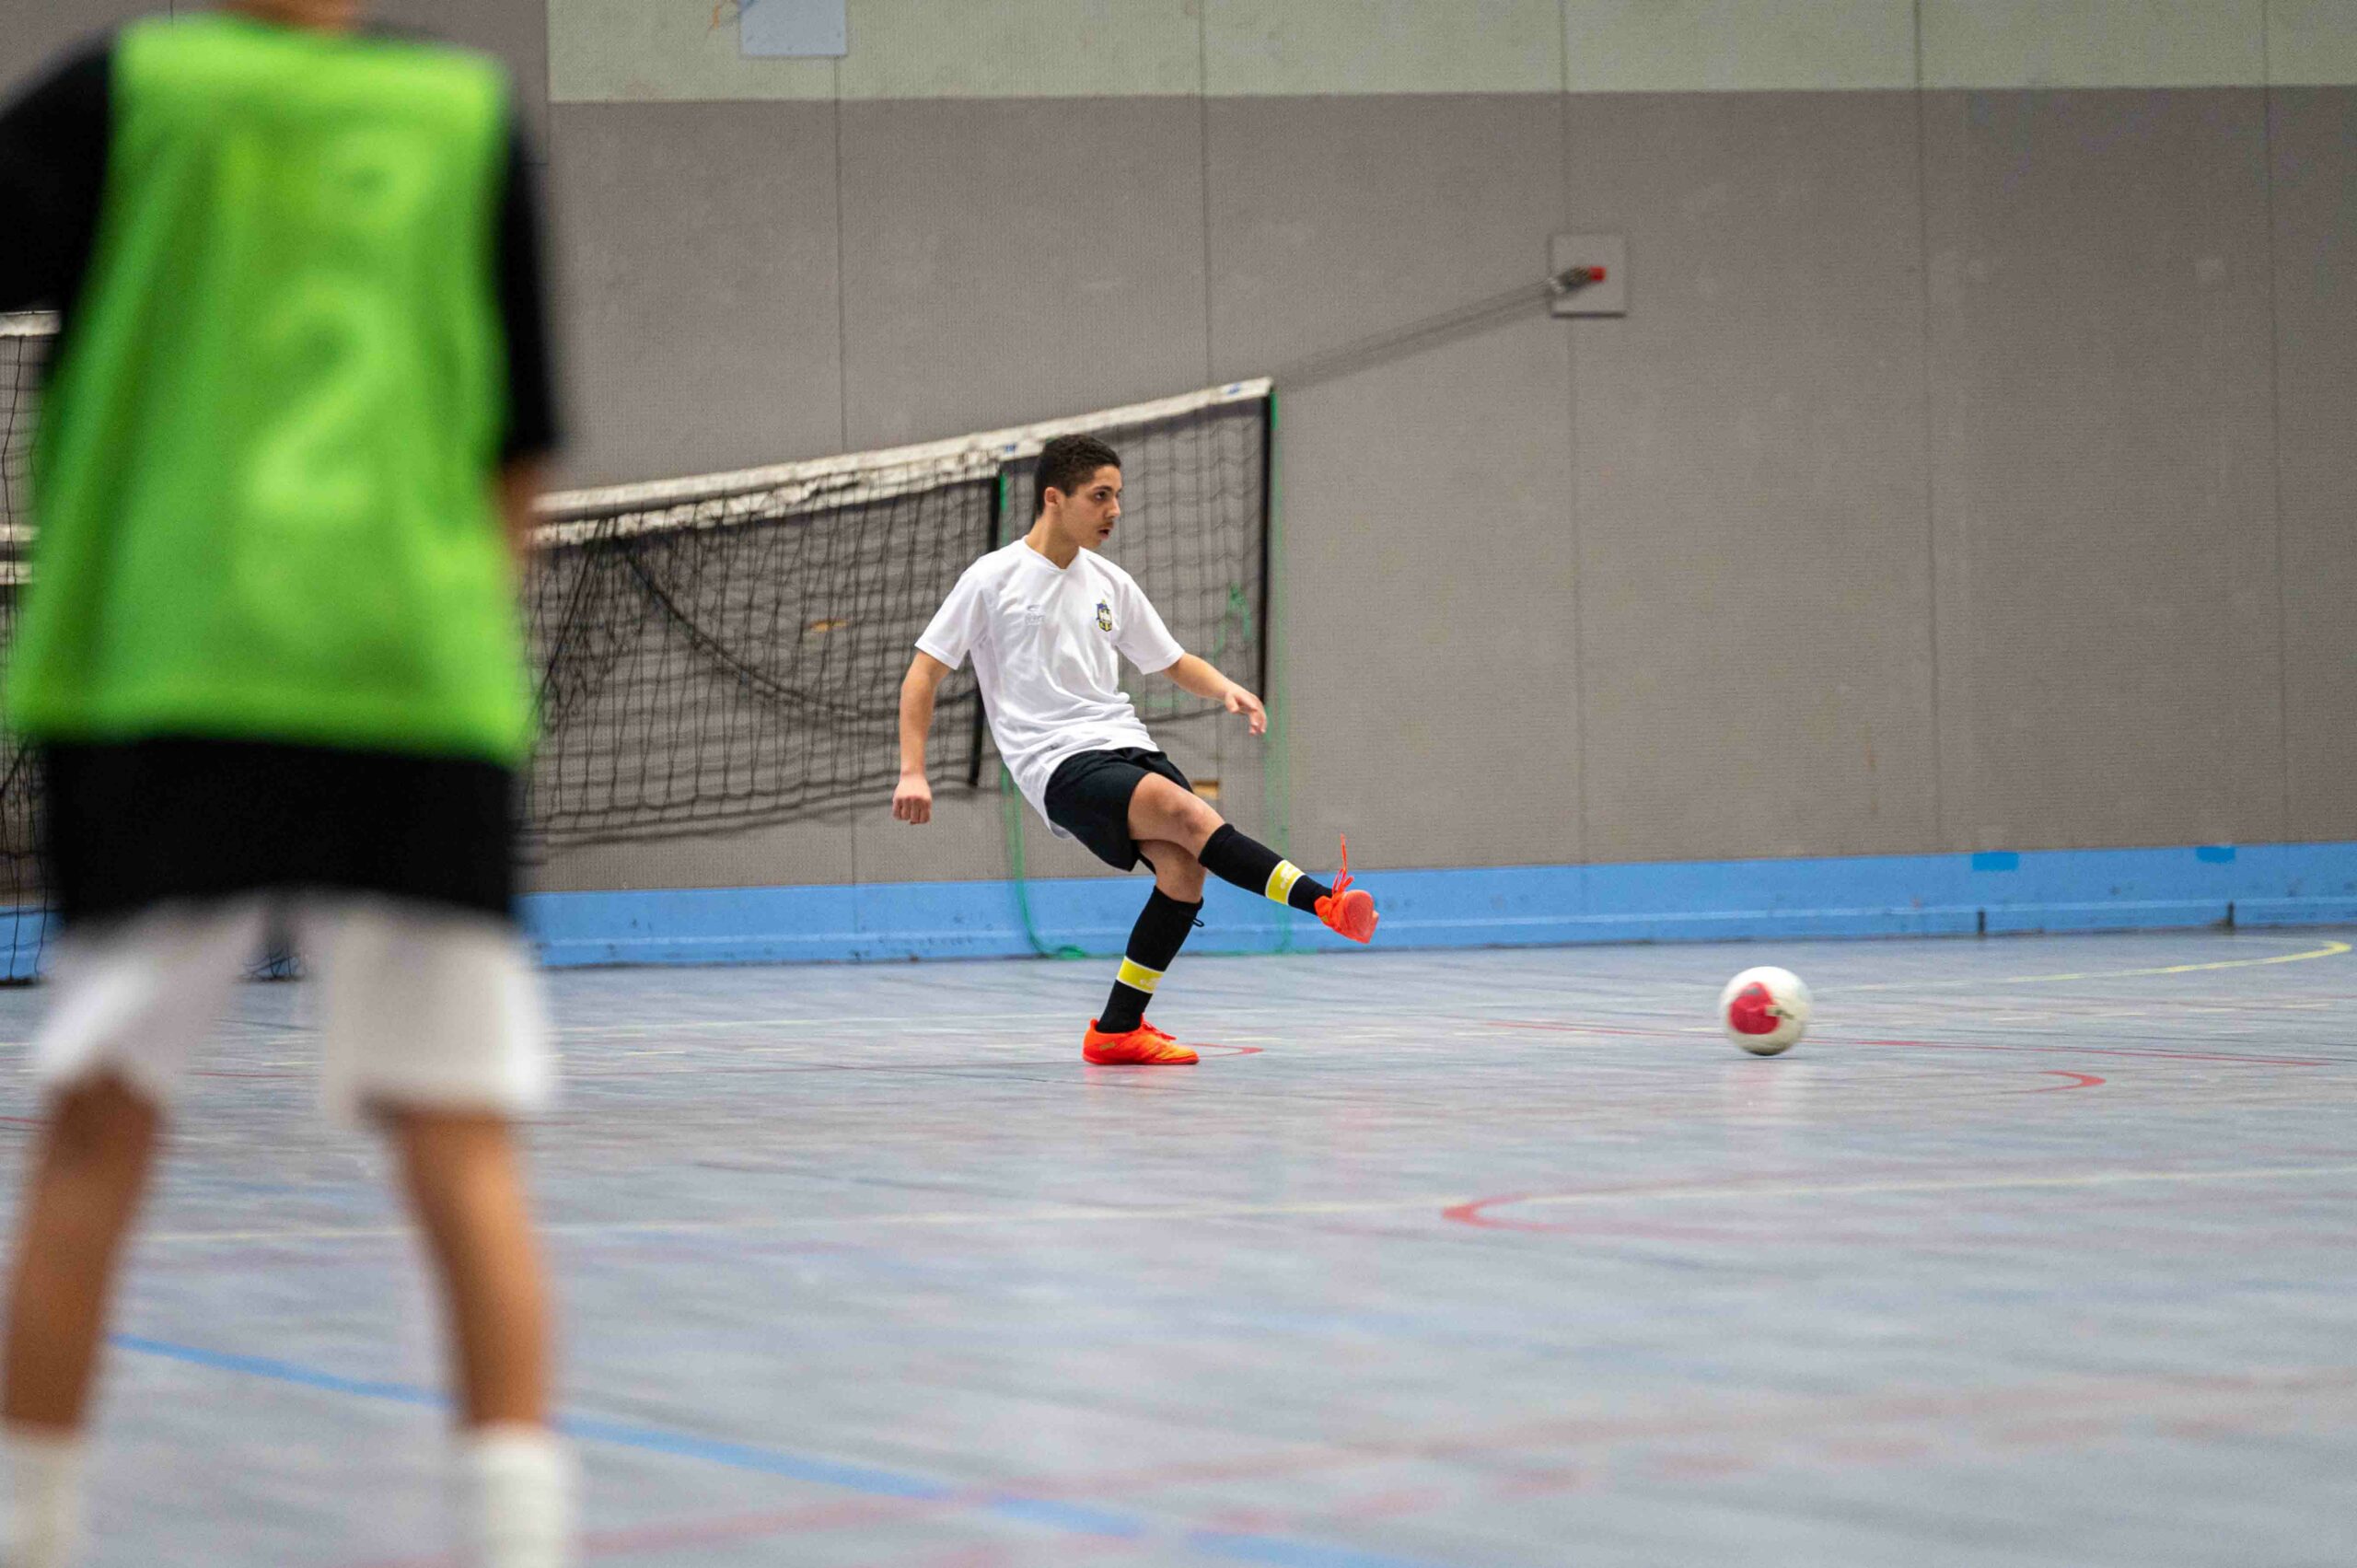 Reportage photo sport Futsall Villeurbanne